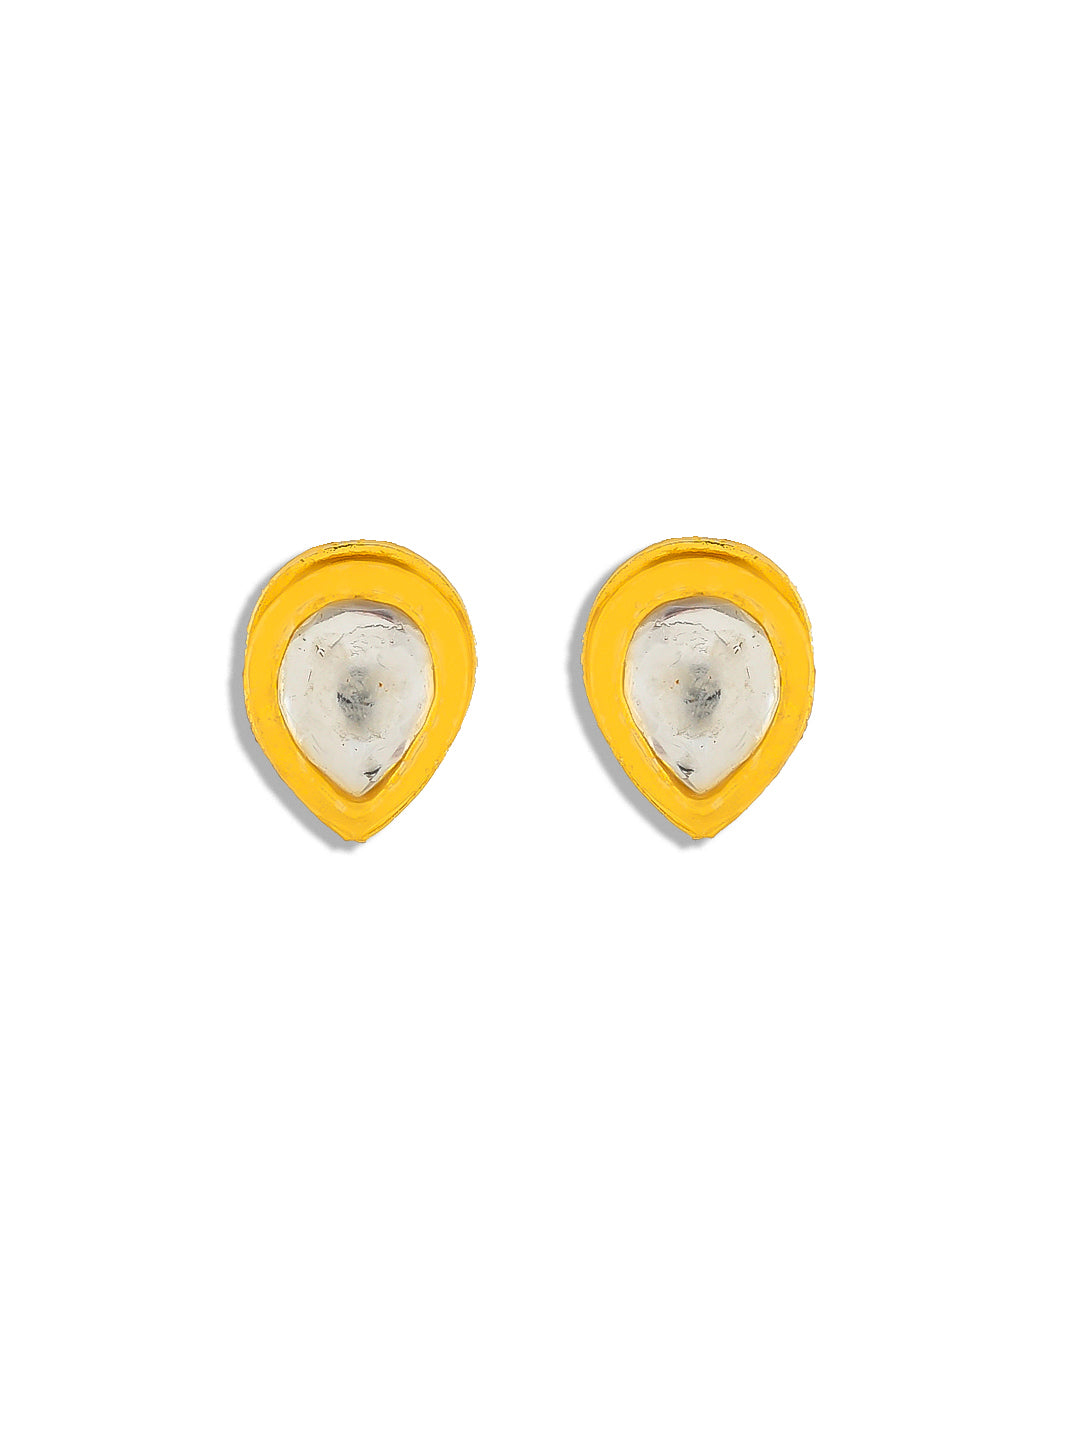 Classic Antique Kundan Gold Plated Studs Earrings For Girls Women